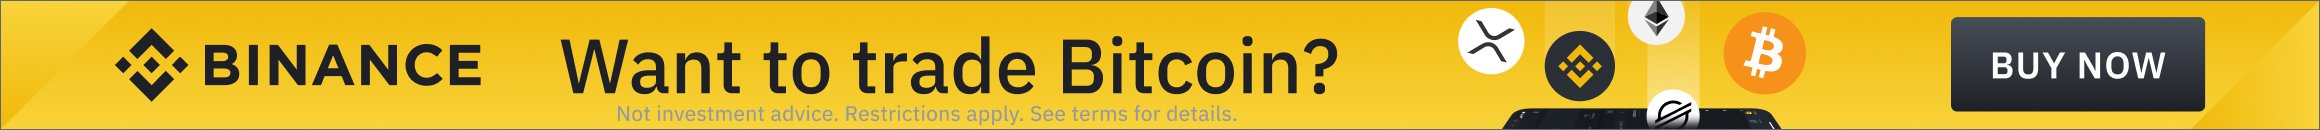 Binance - Trade Bitcoin & Crypto